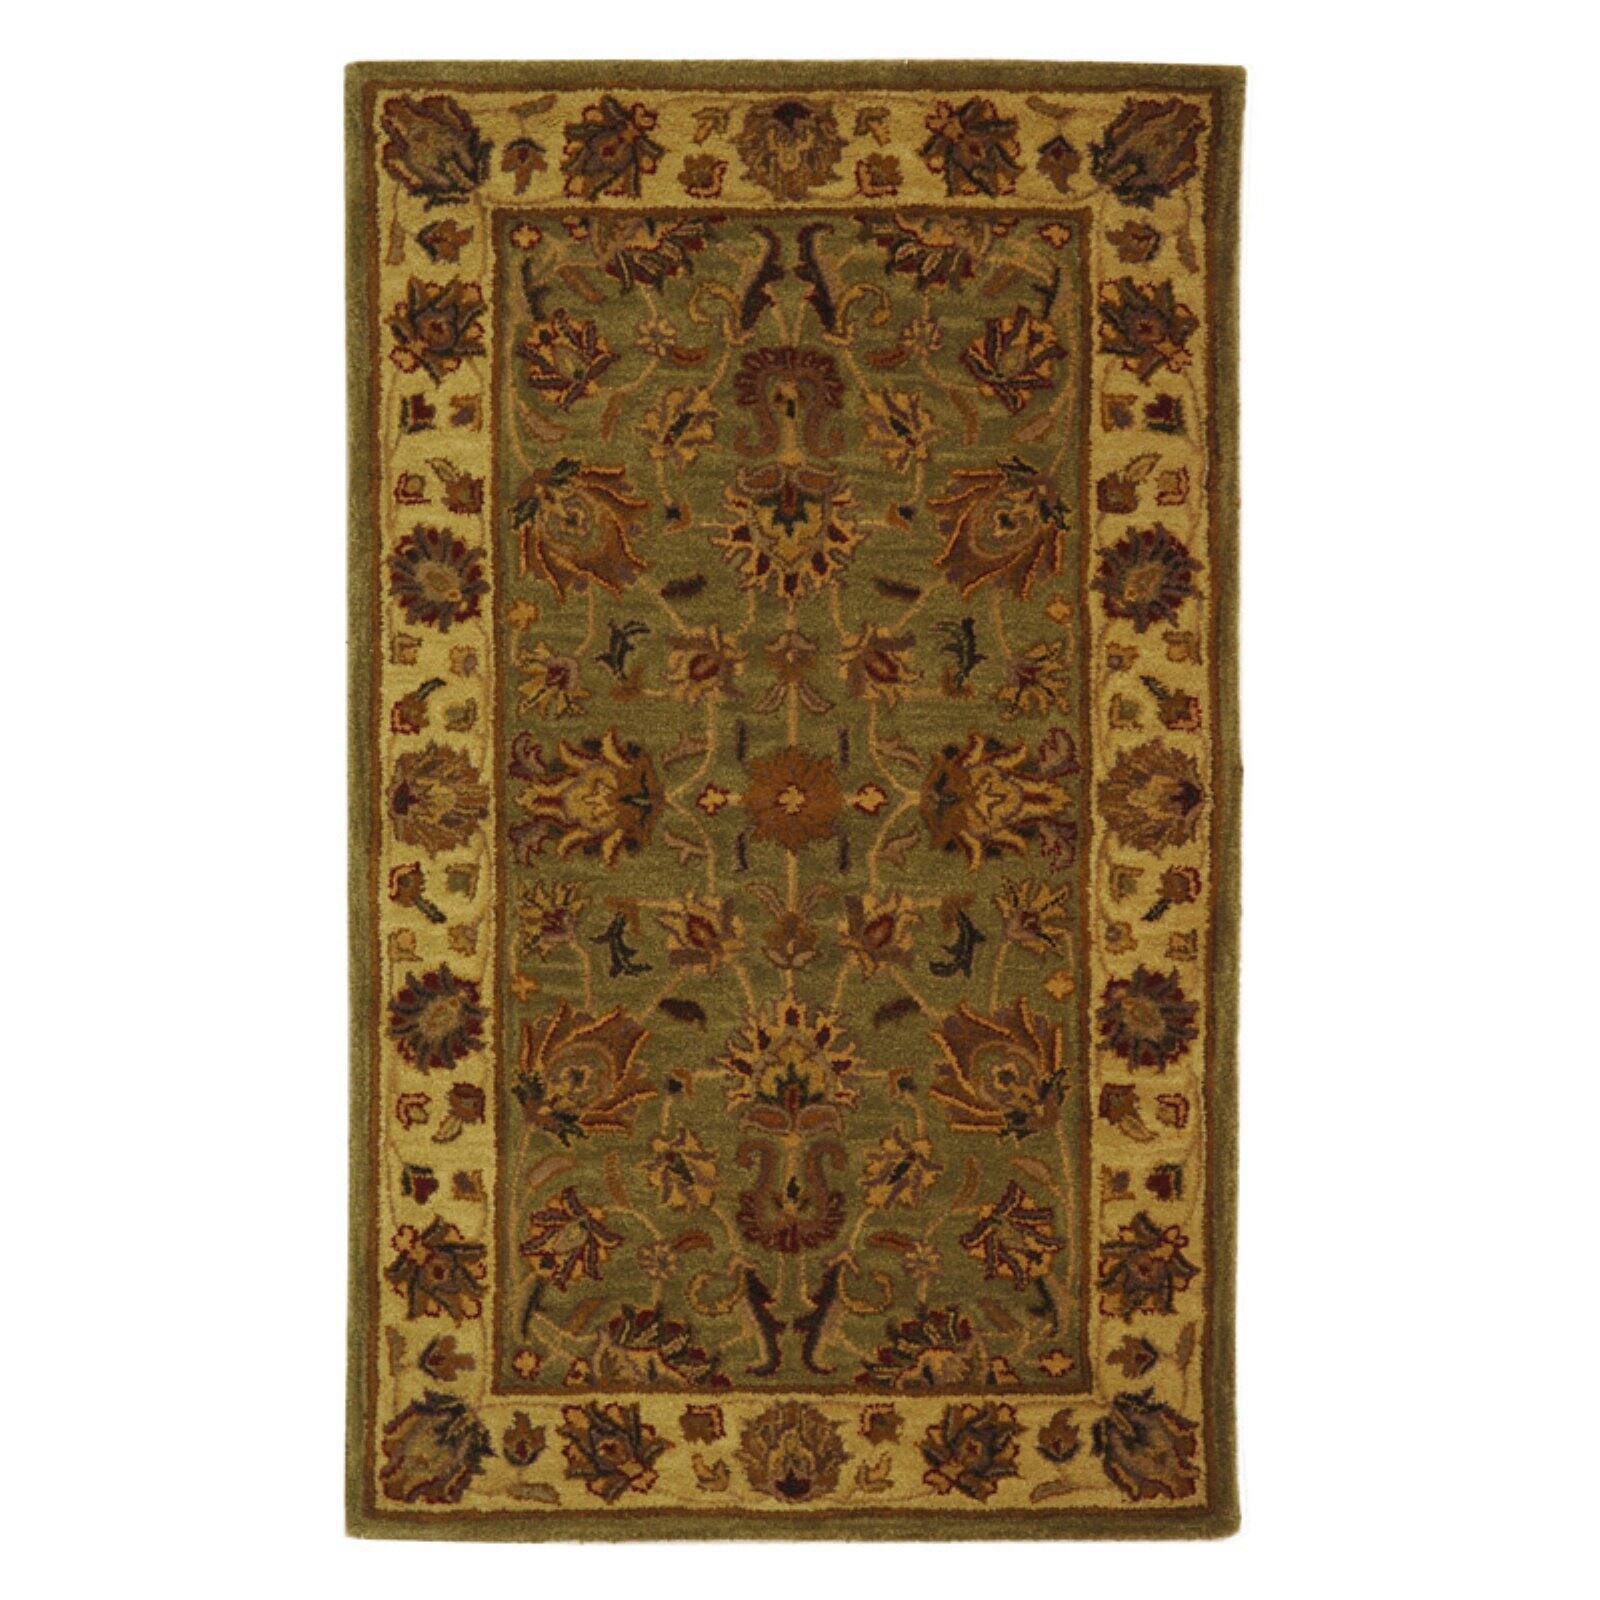 SAFAVIEH Heritage Regis Traditional Wool Area Rug, Green/Gold, 2'3" x 4' - image 4 of 10